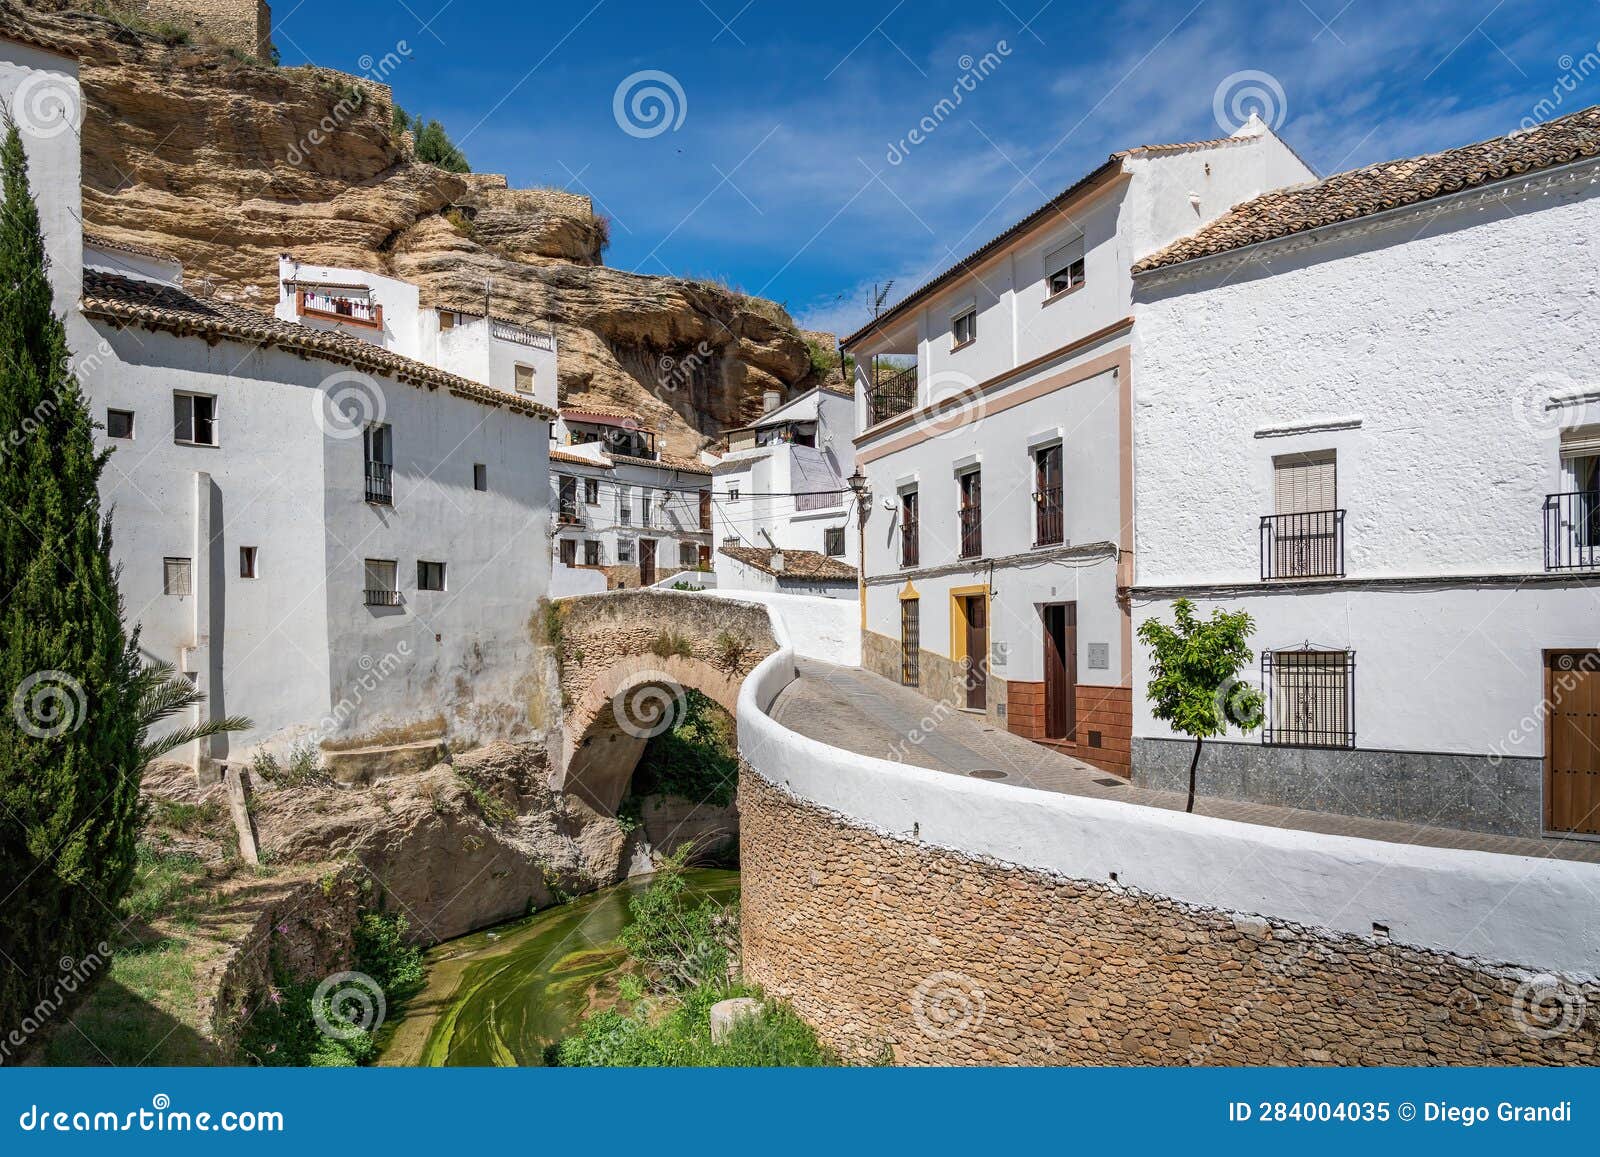 bridge over trejo river and rock overhangs - setenil de las bodegas, andalusia, spain